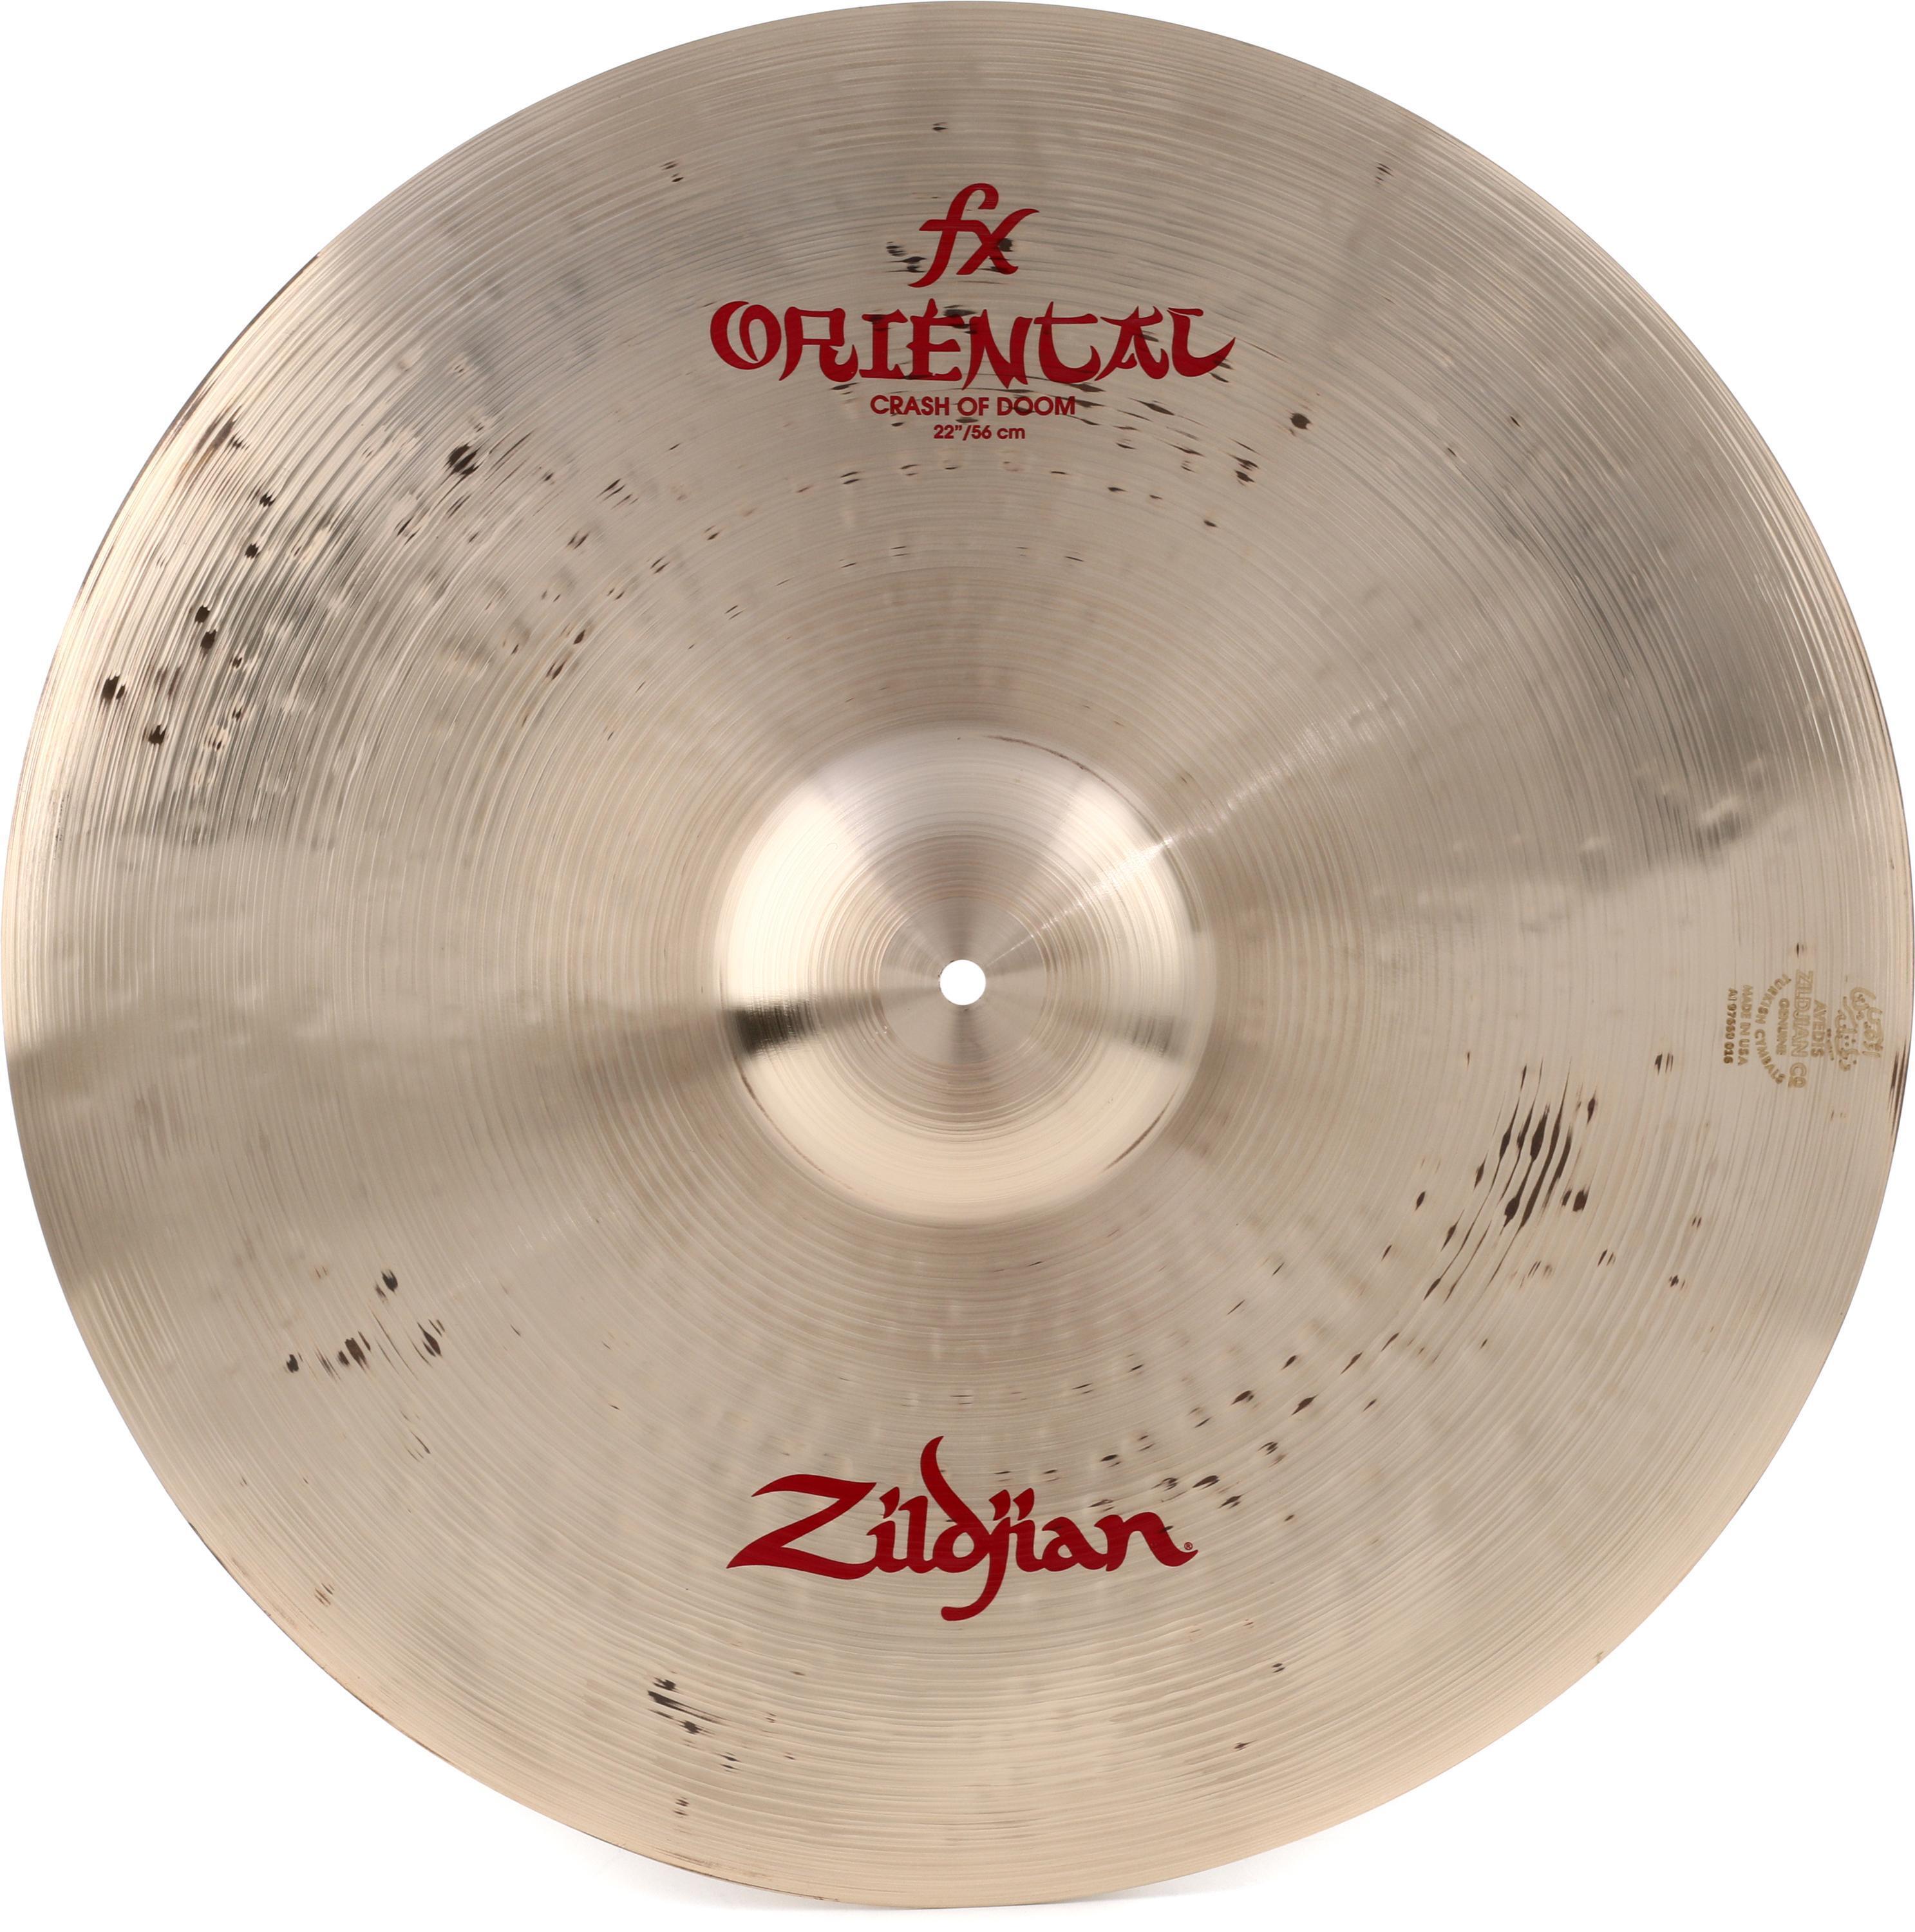 Zildjian 22 inch Oriental Crash of Doom Cymbal | Sweetwater